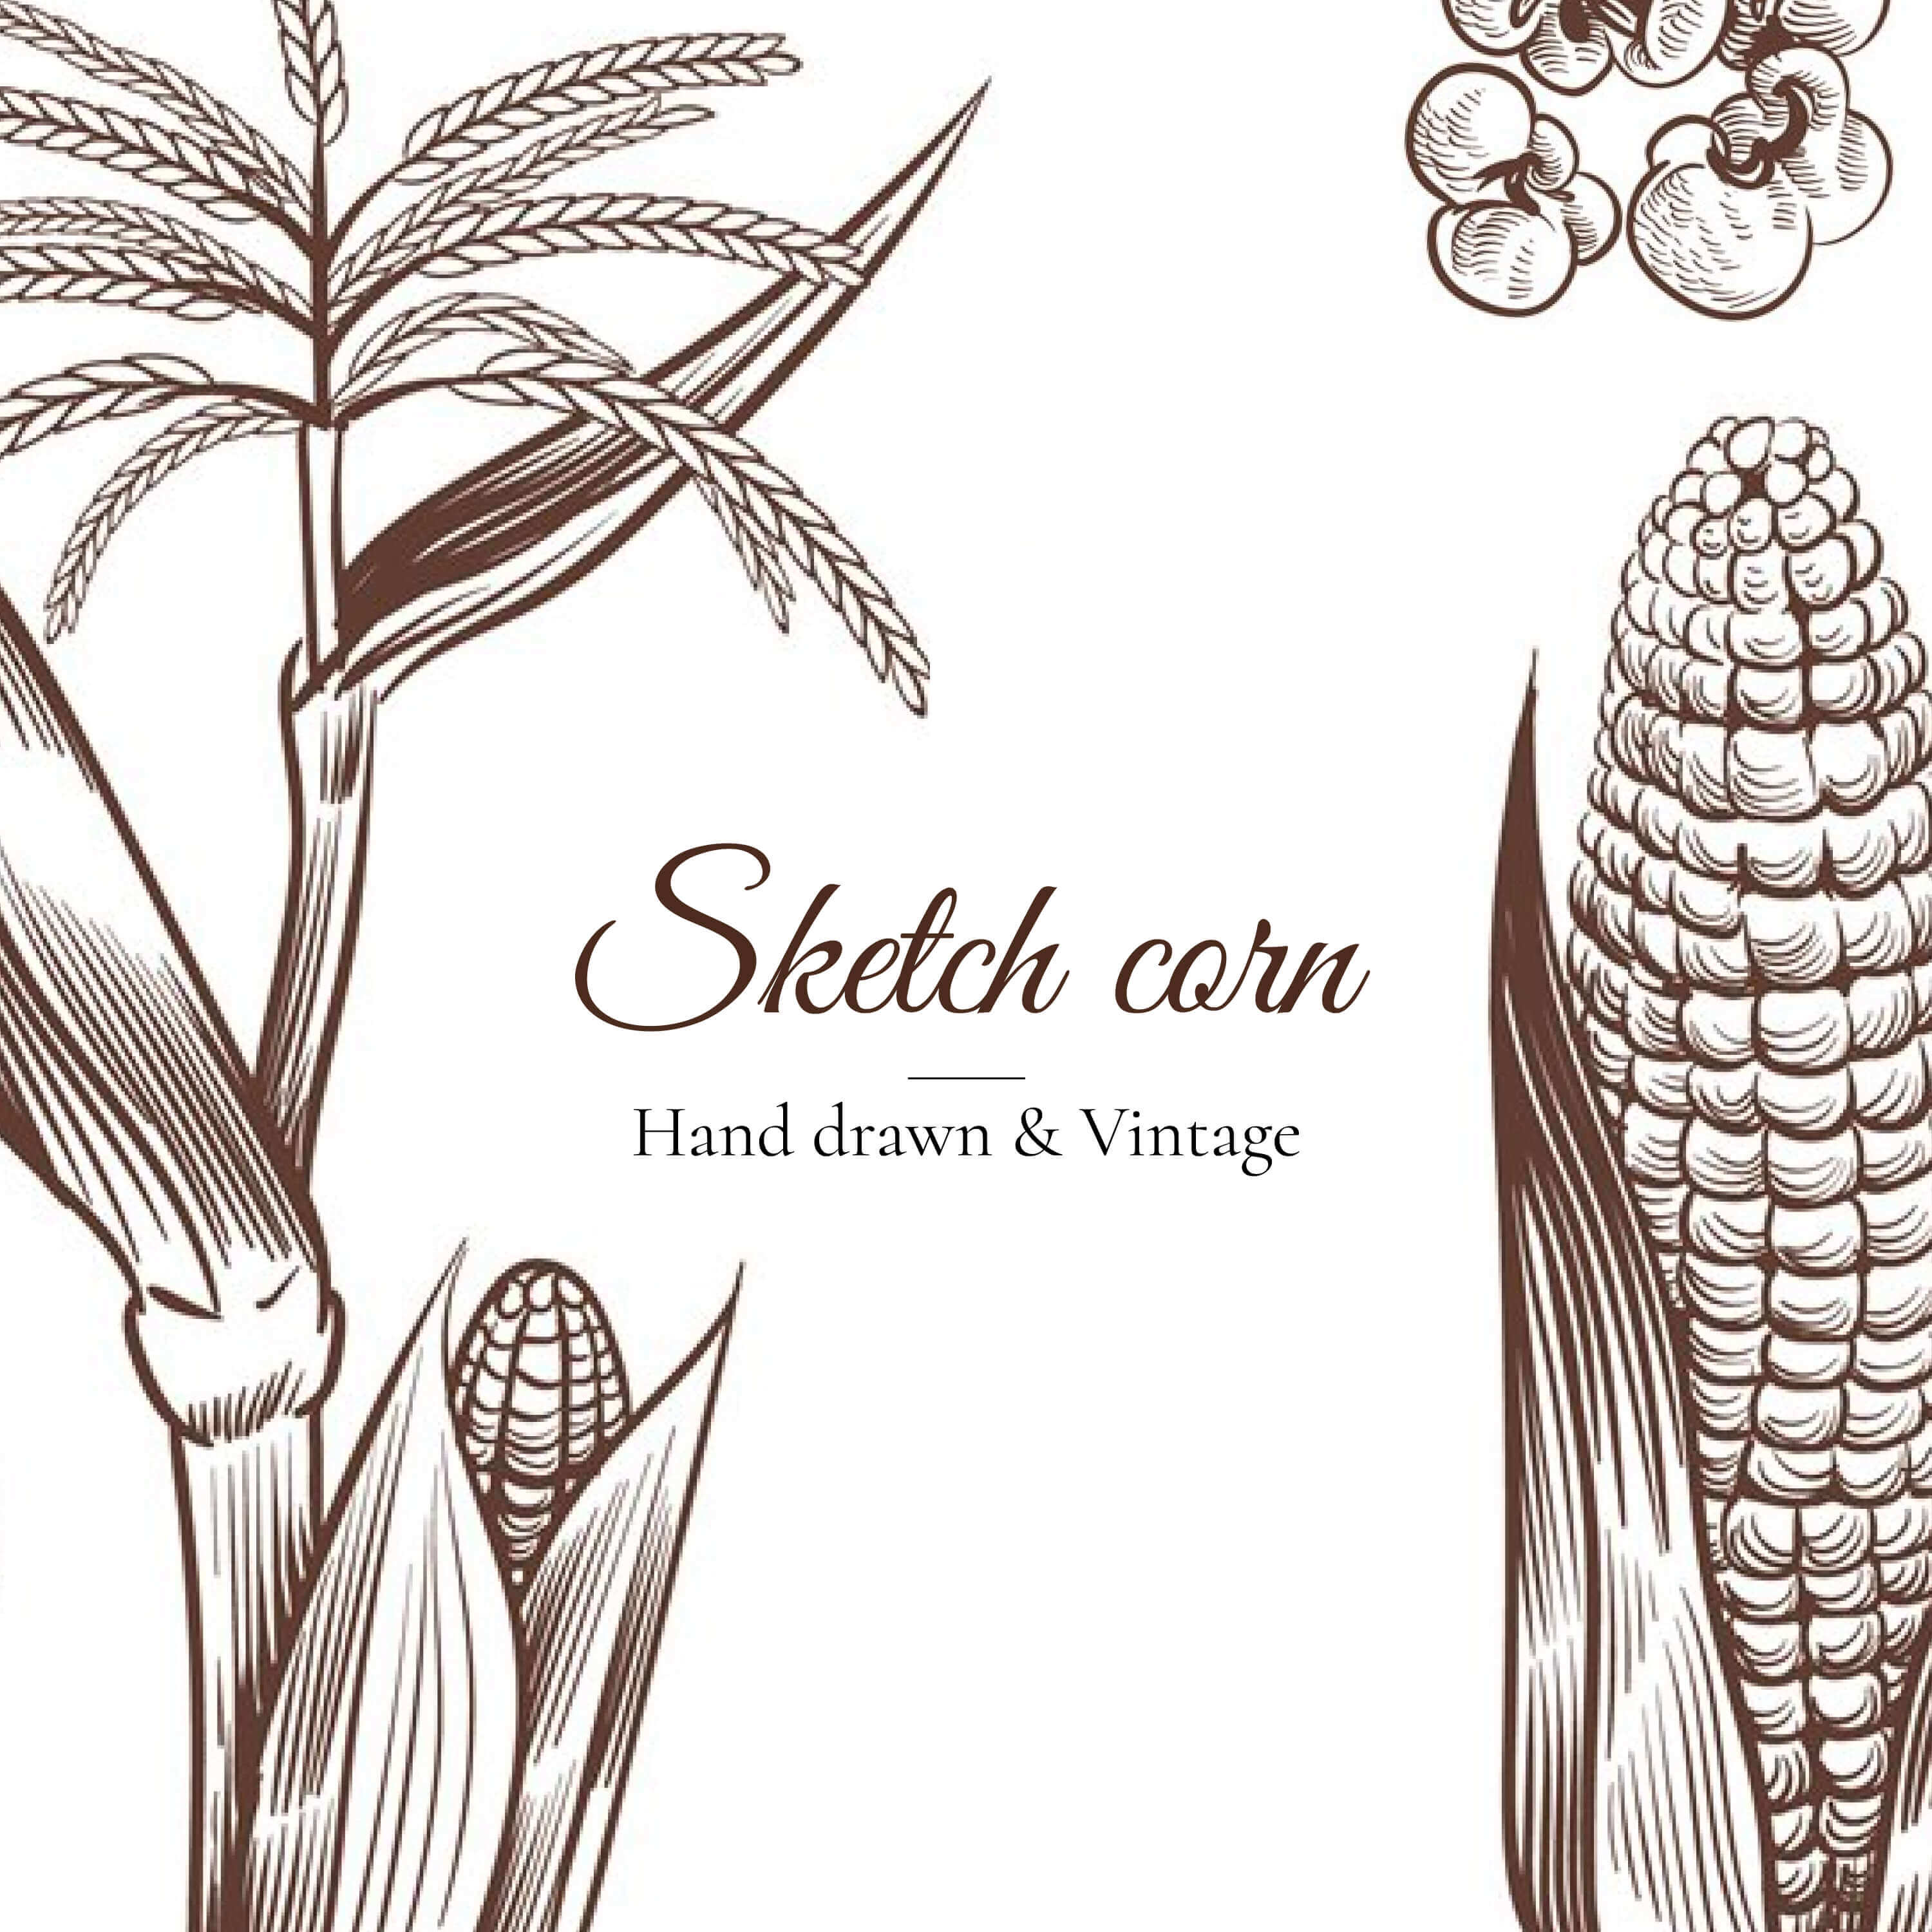 Vintage image of a corn plant.